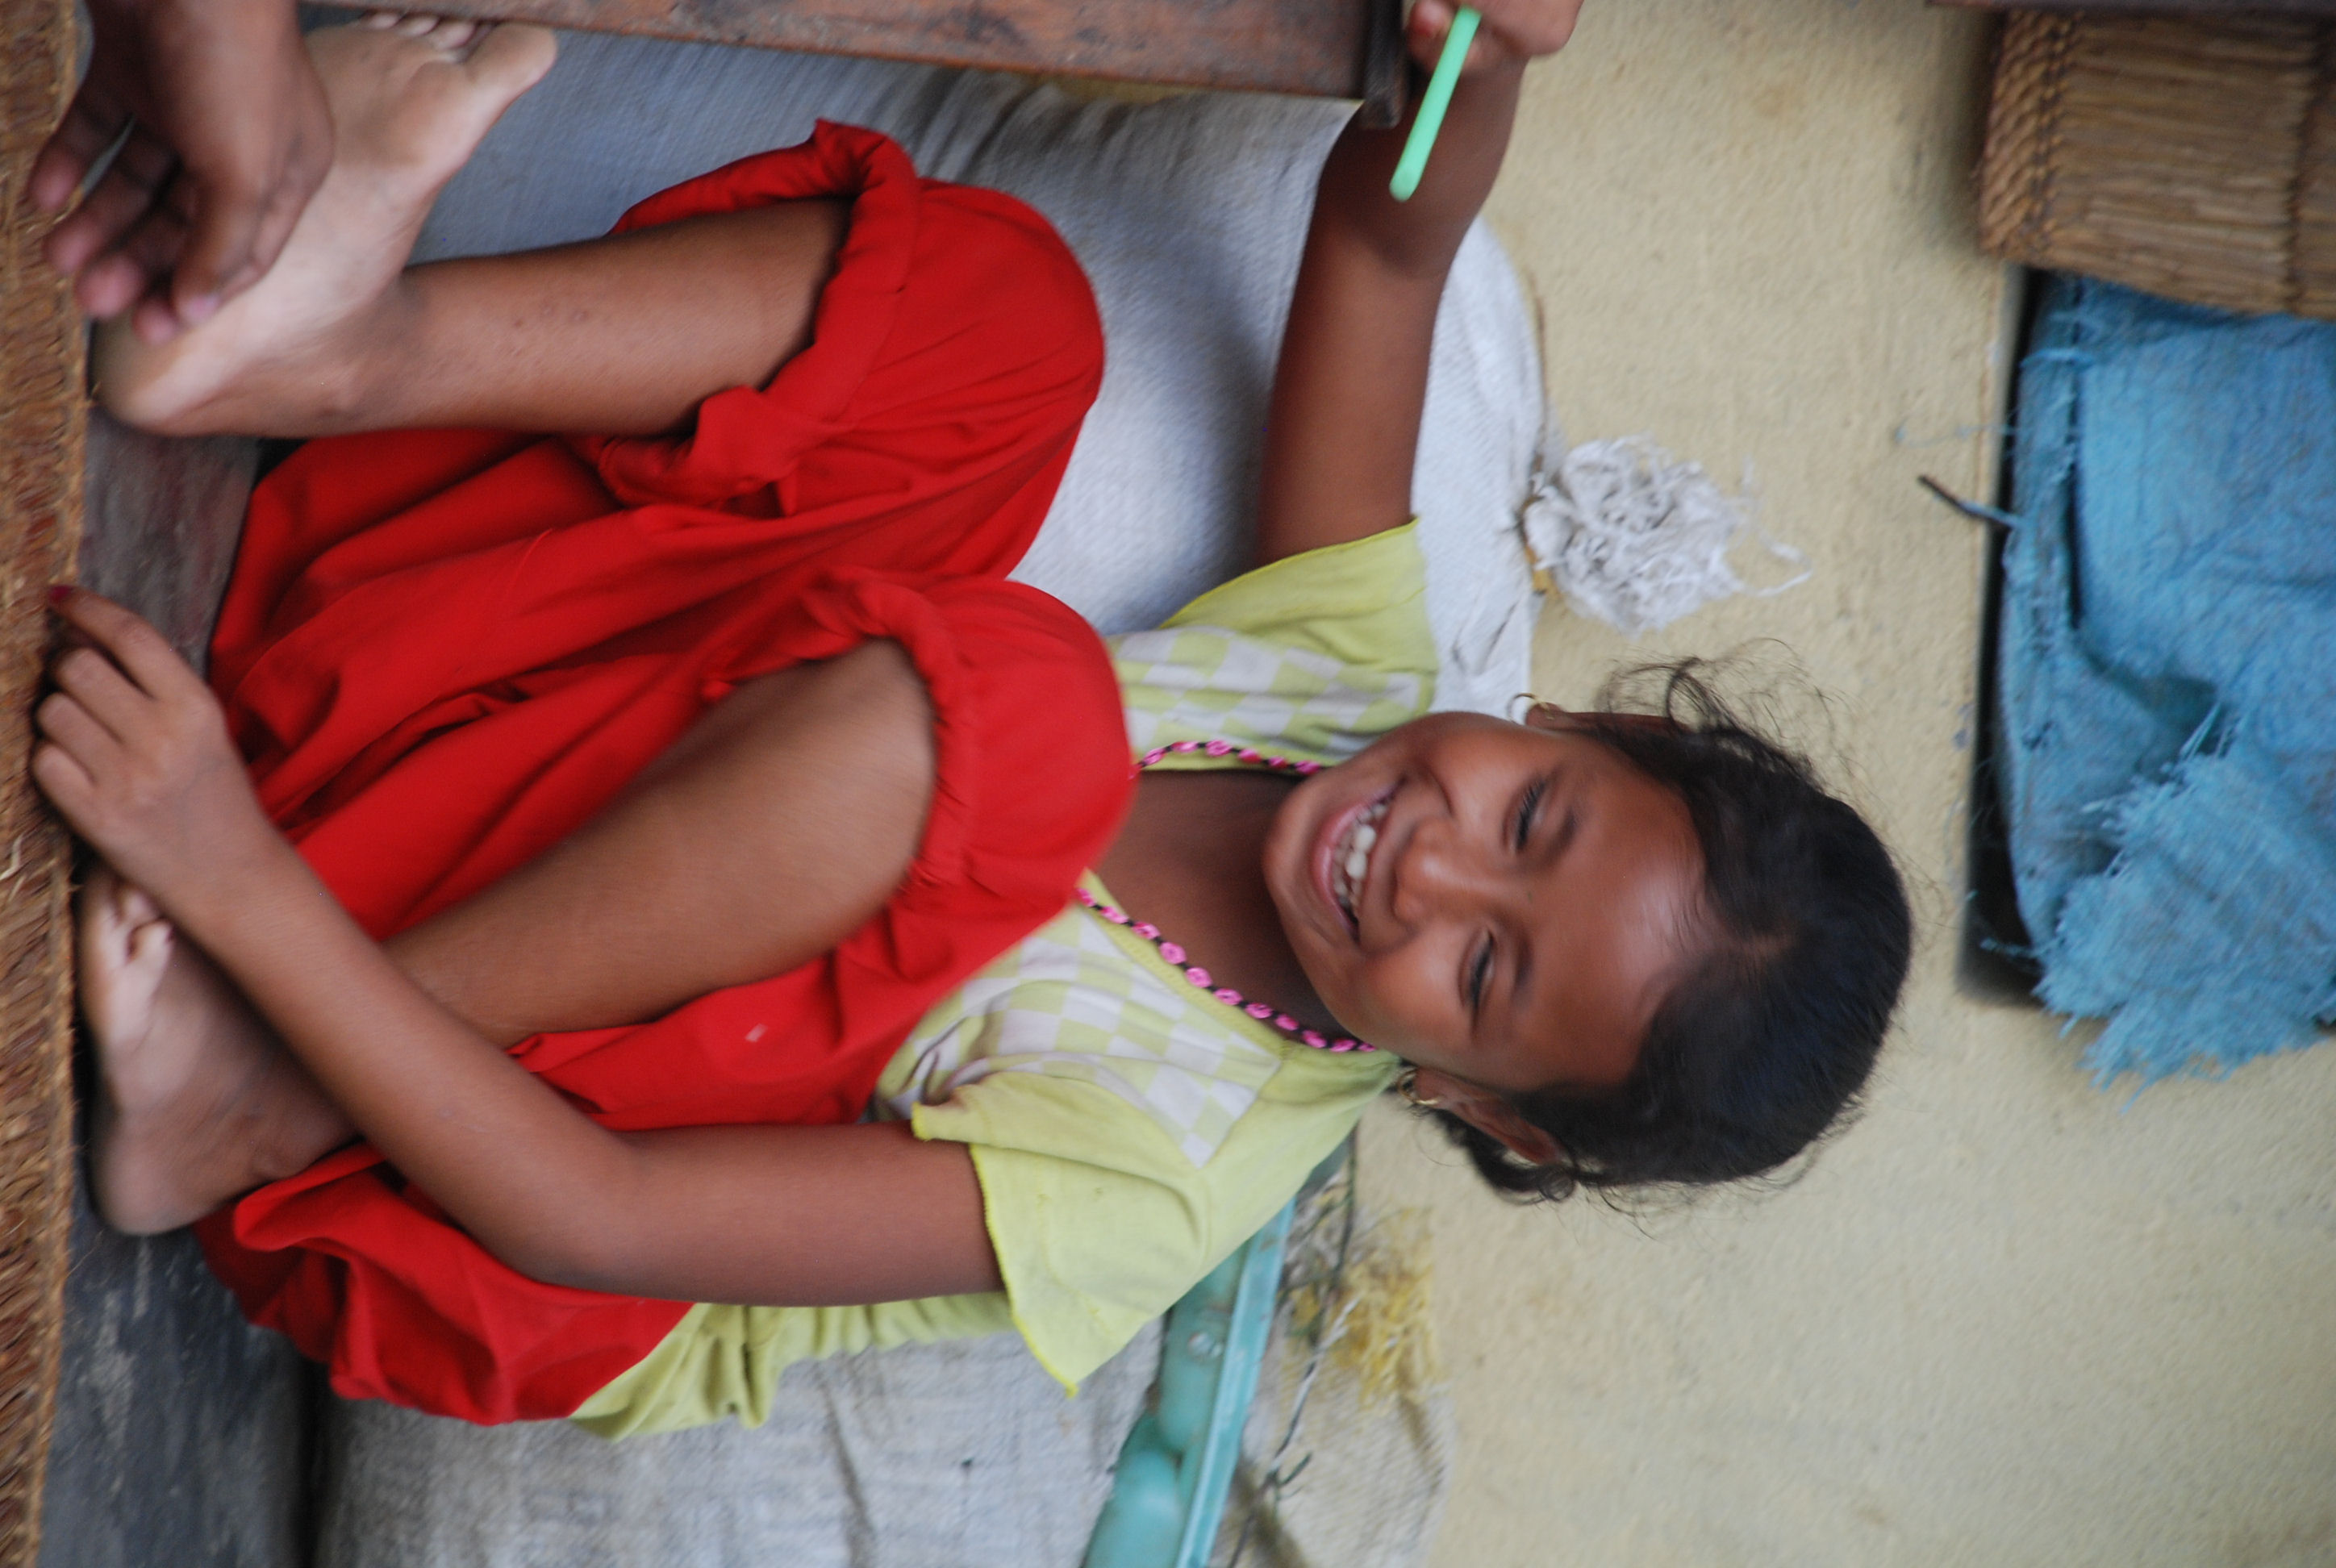 Tharu girl in Chitwan, Nepal